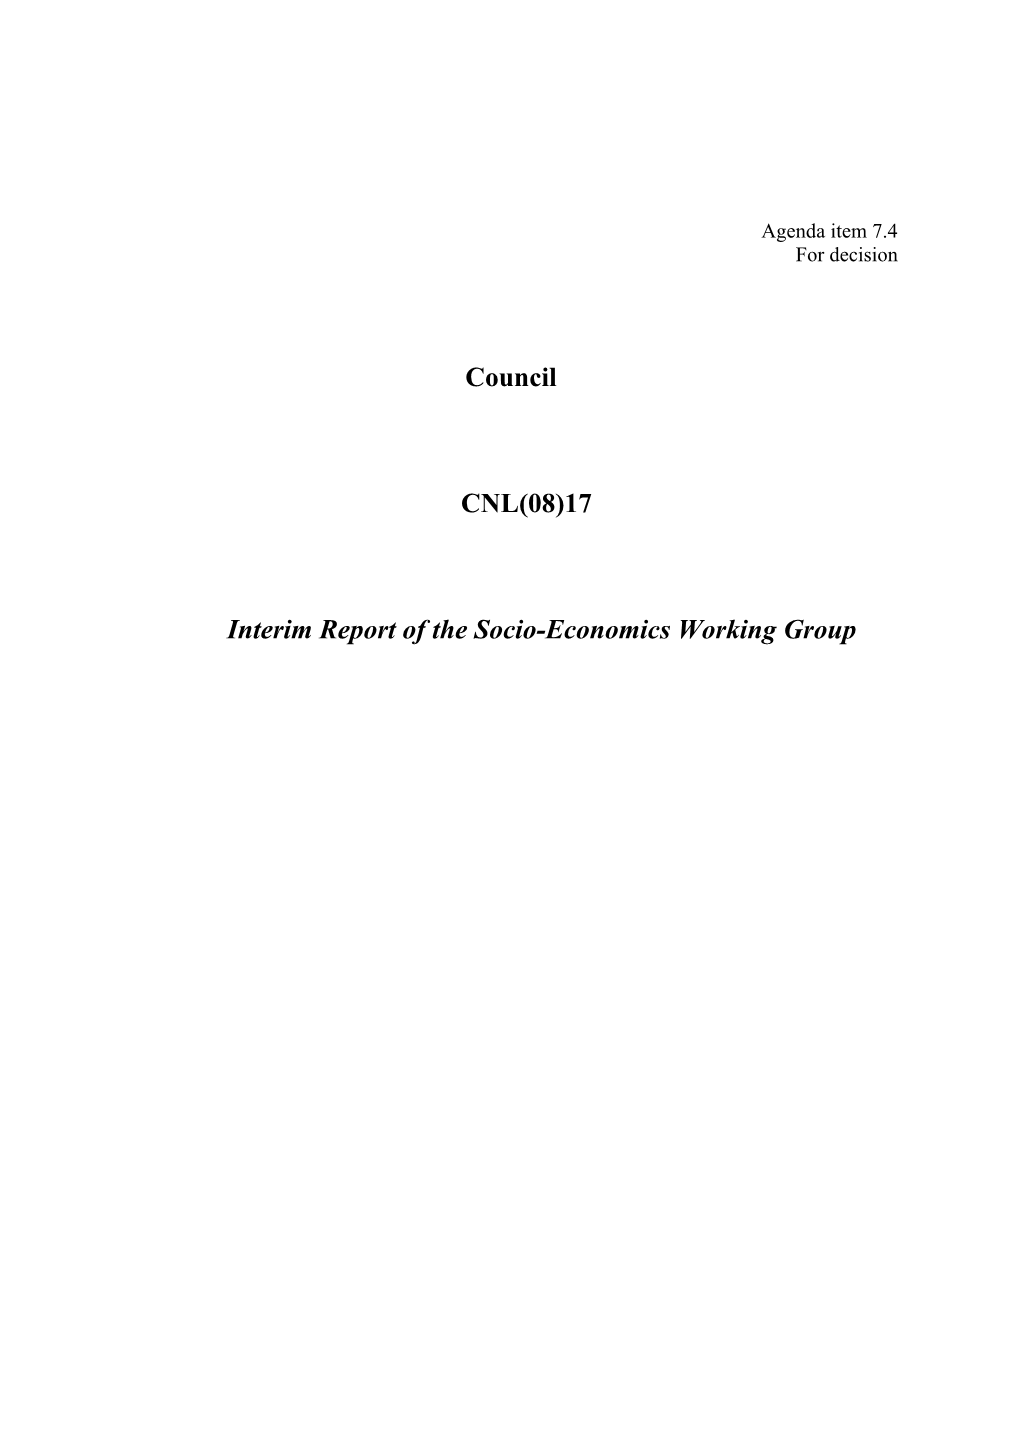 Council CNL(08)17 Interim Report of the Socio-Economics Working Group